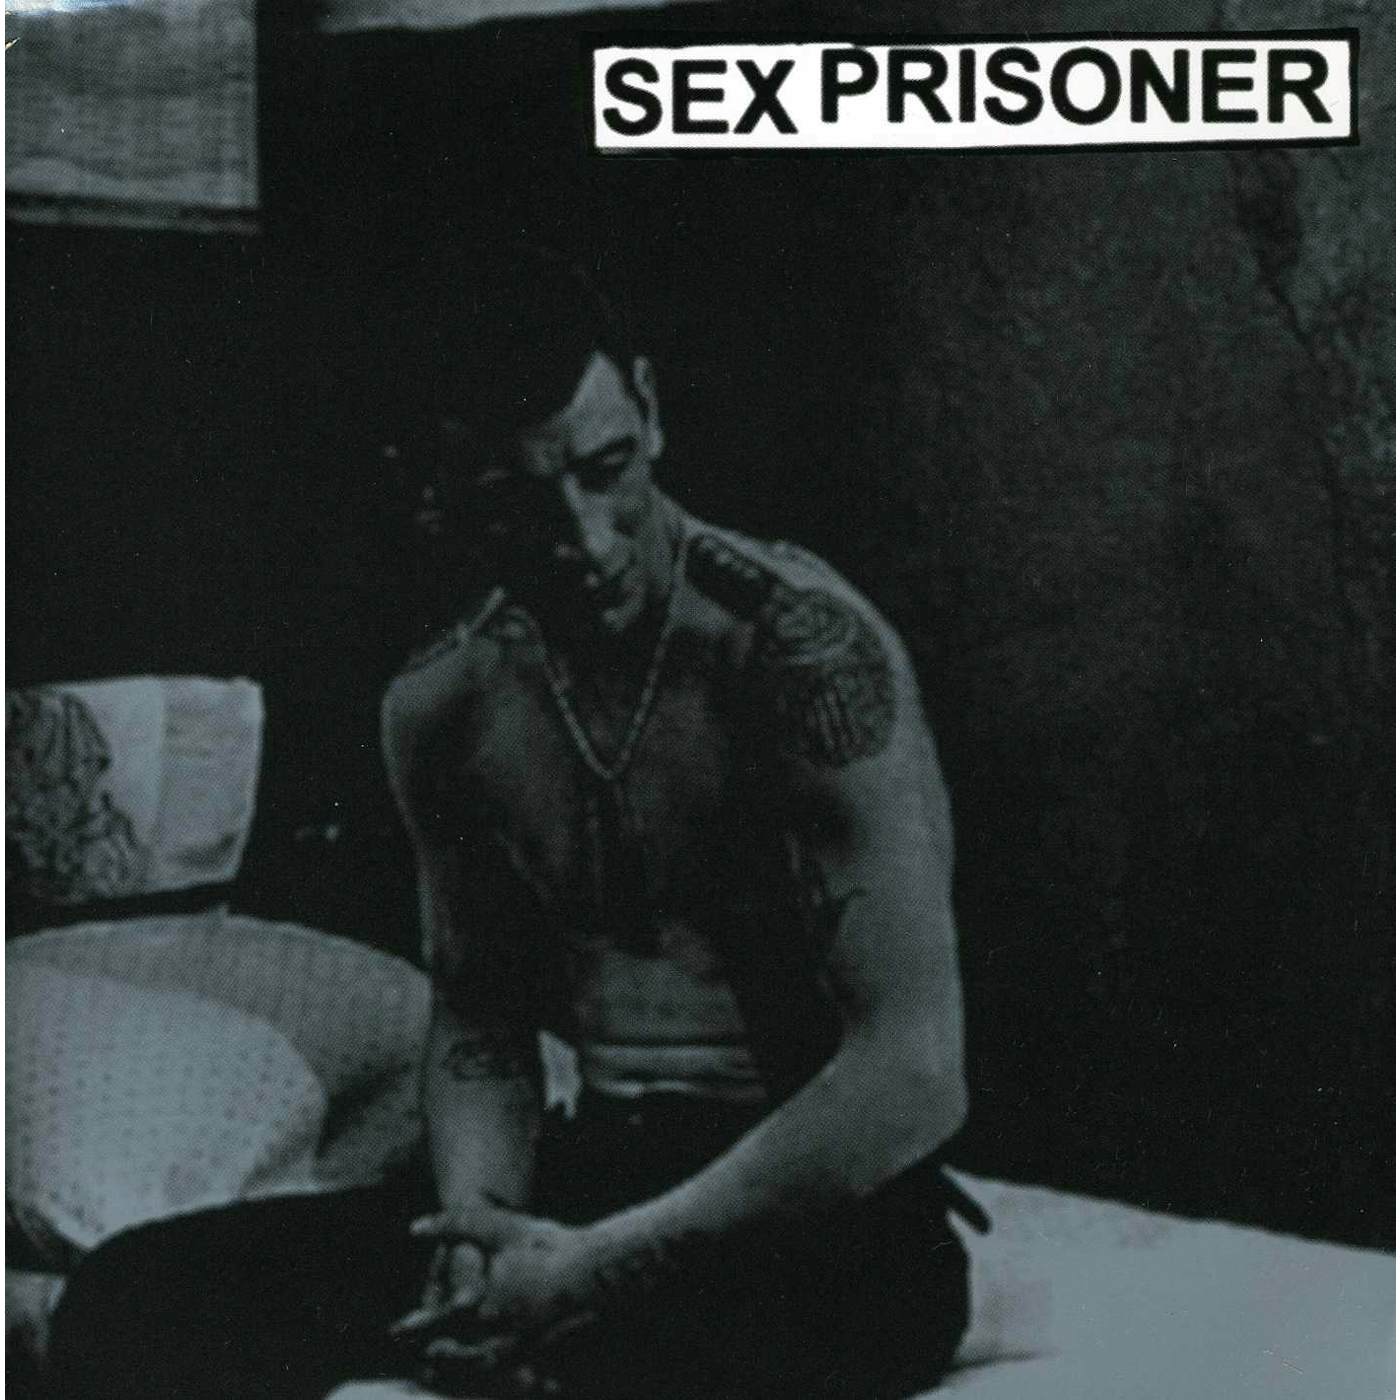 SEX PRISONER Vinyl Record